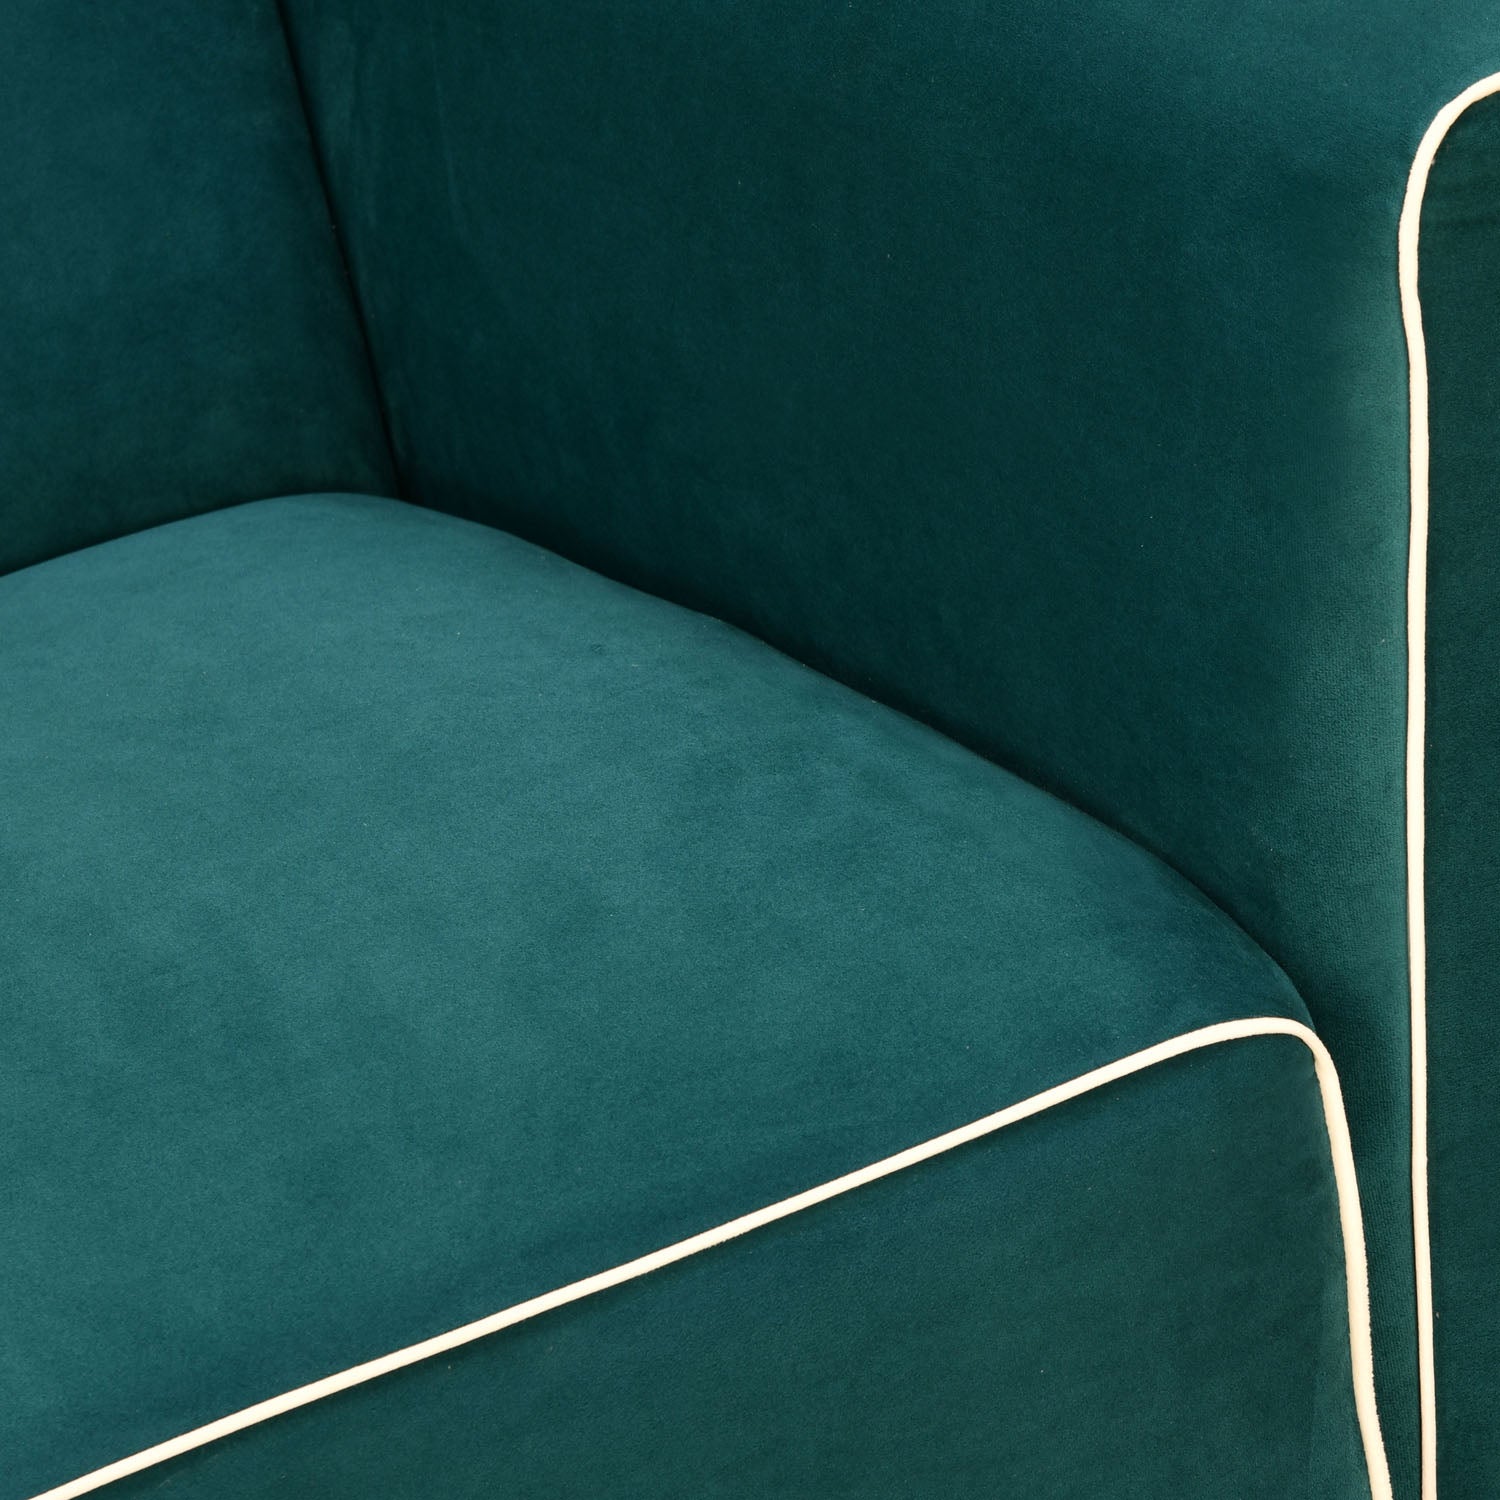 Kinsella 2 Seater Sofa (Teal Blue)